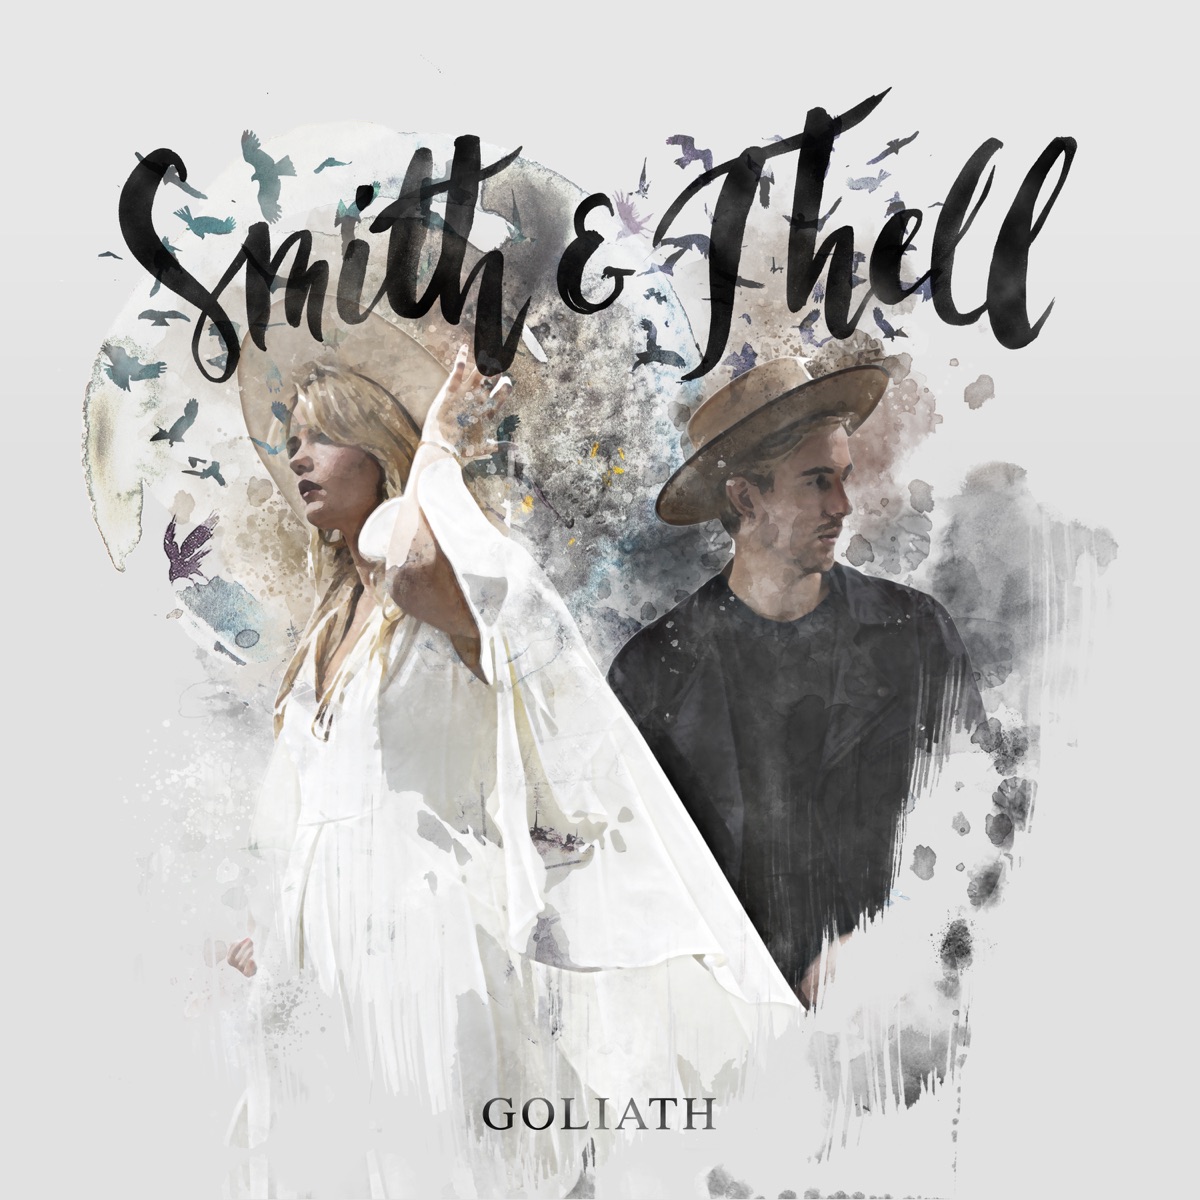 Smith & Thell - Forgive Me Friend ft. Swedish Jam Factory (Lyrics) 